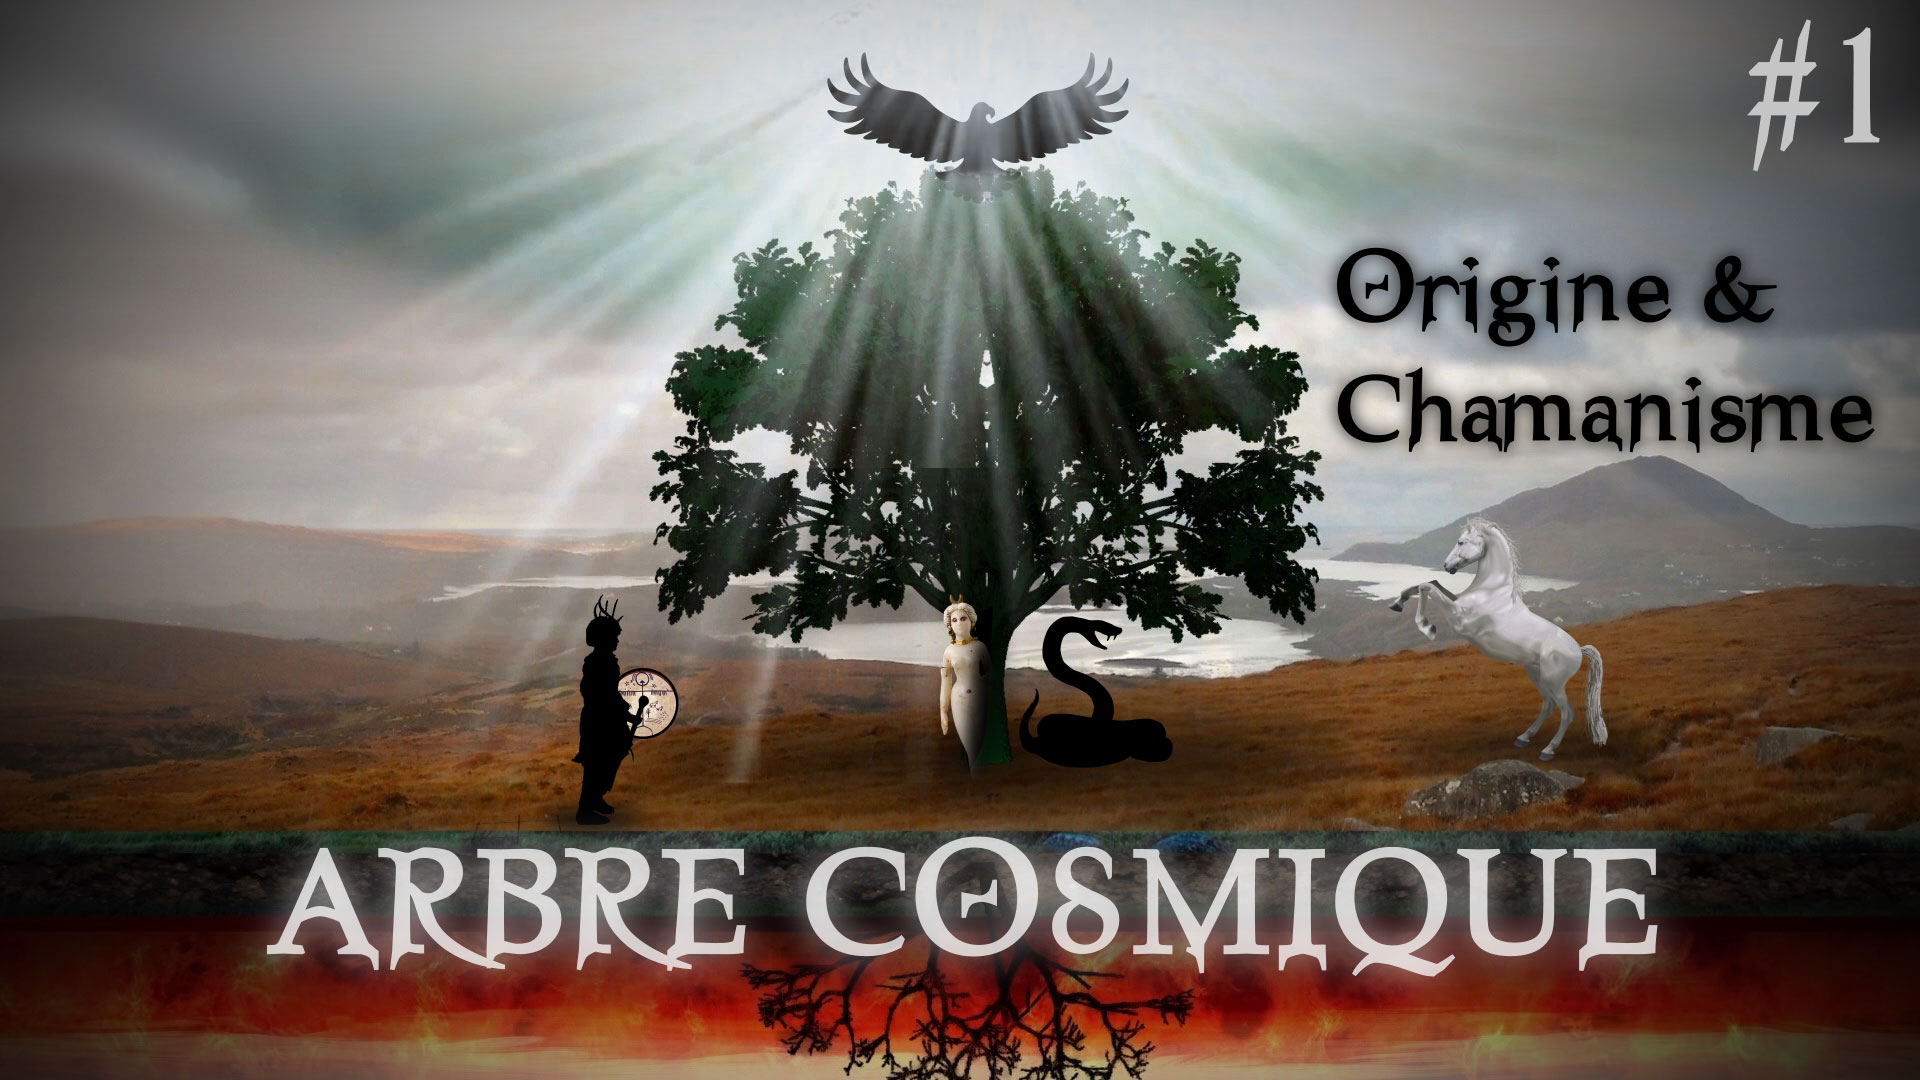 L’arbre cosmique #1 Origine et chamanisme